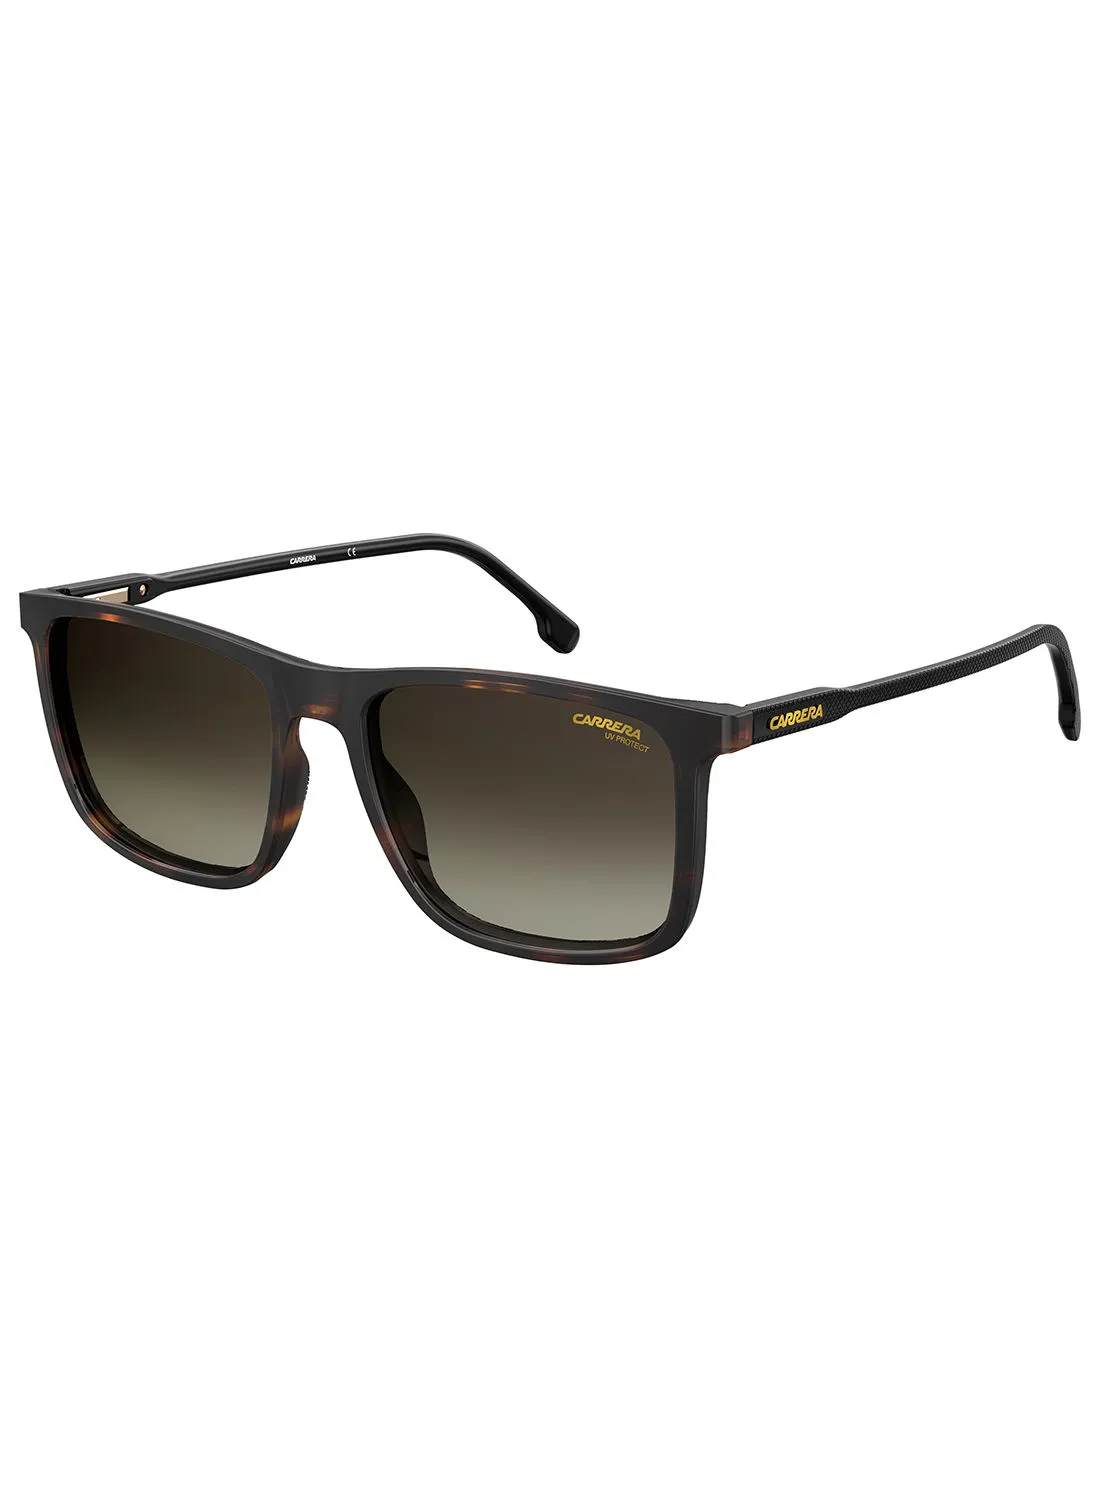 Carrera Men's Square Frame Sunglasses - Lens Size: 55 mm